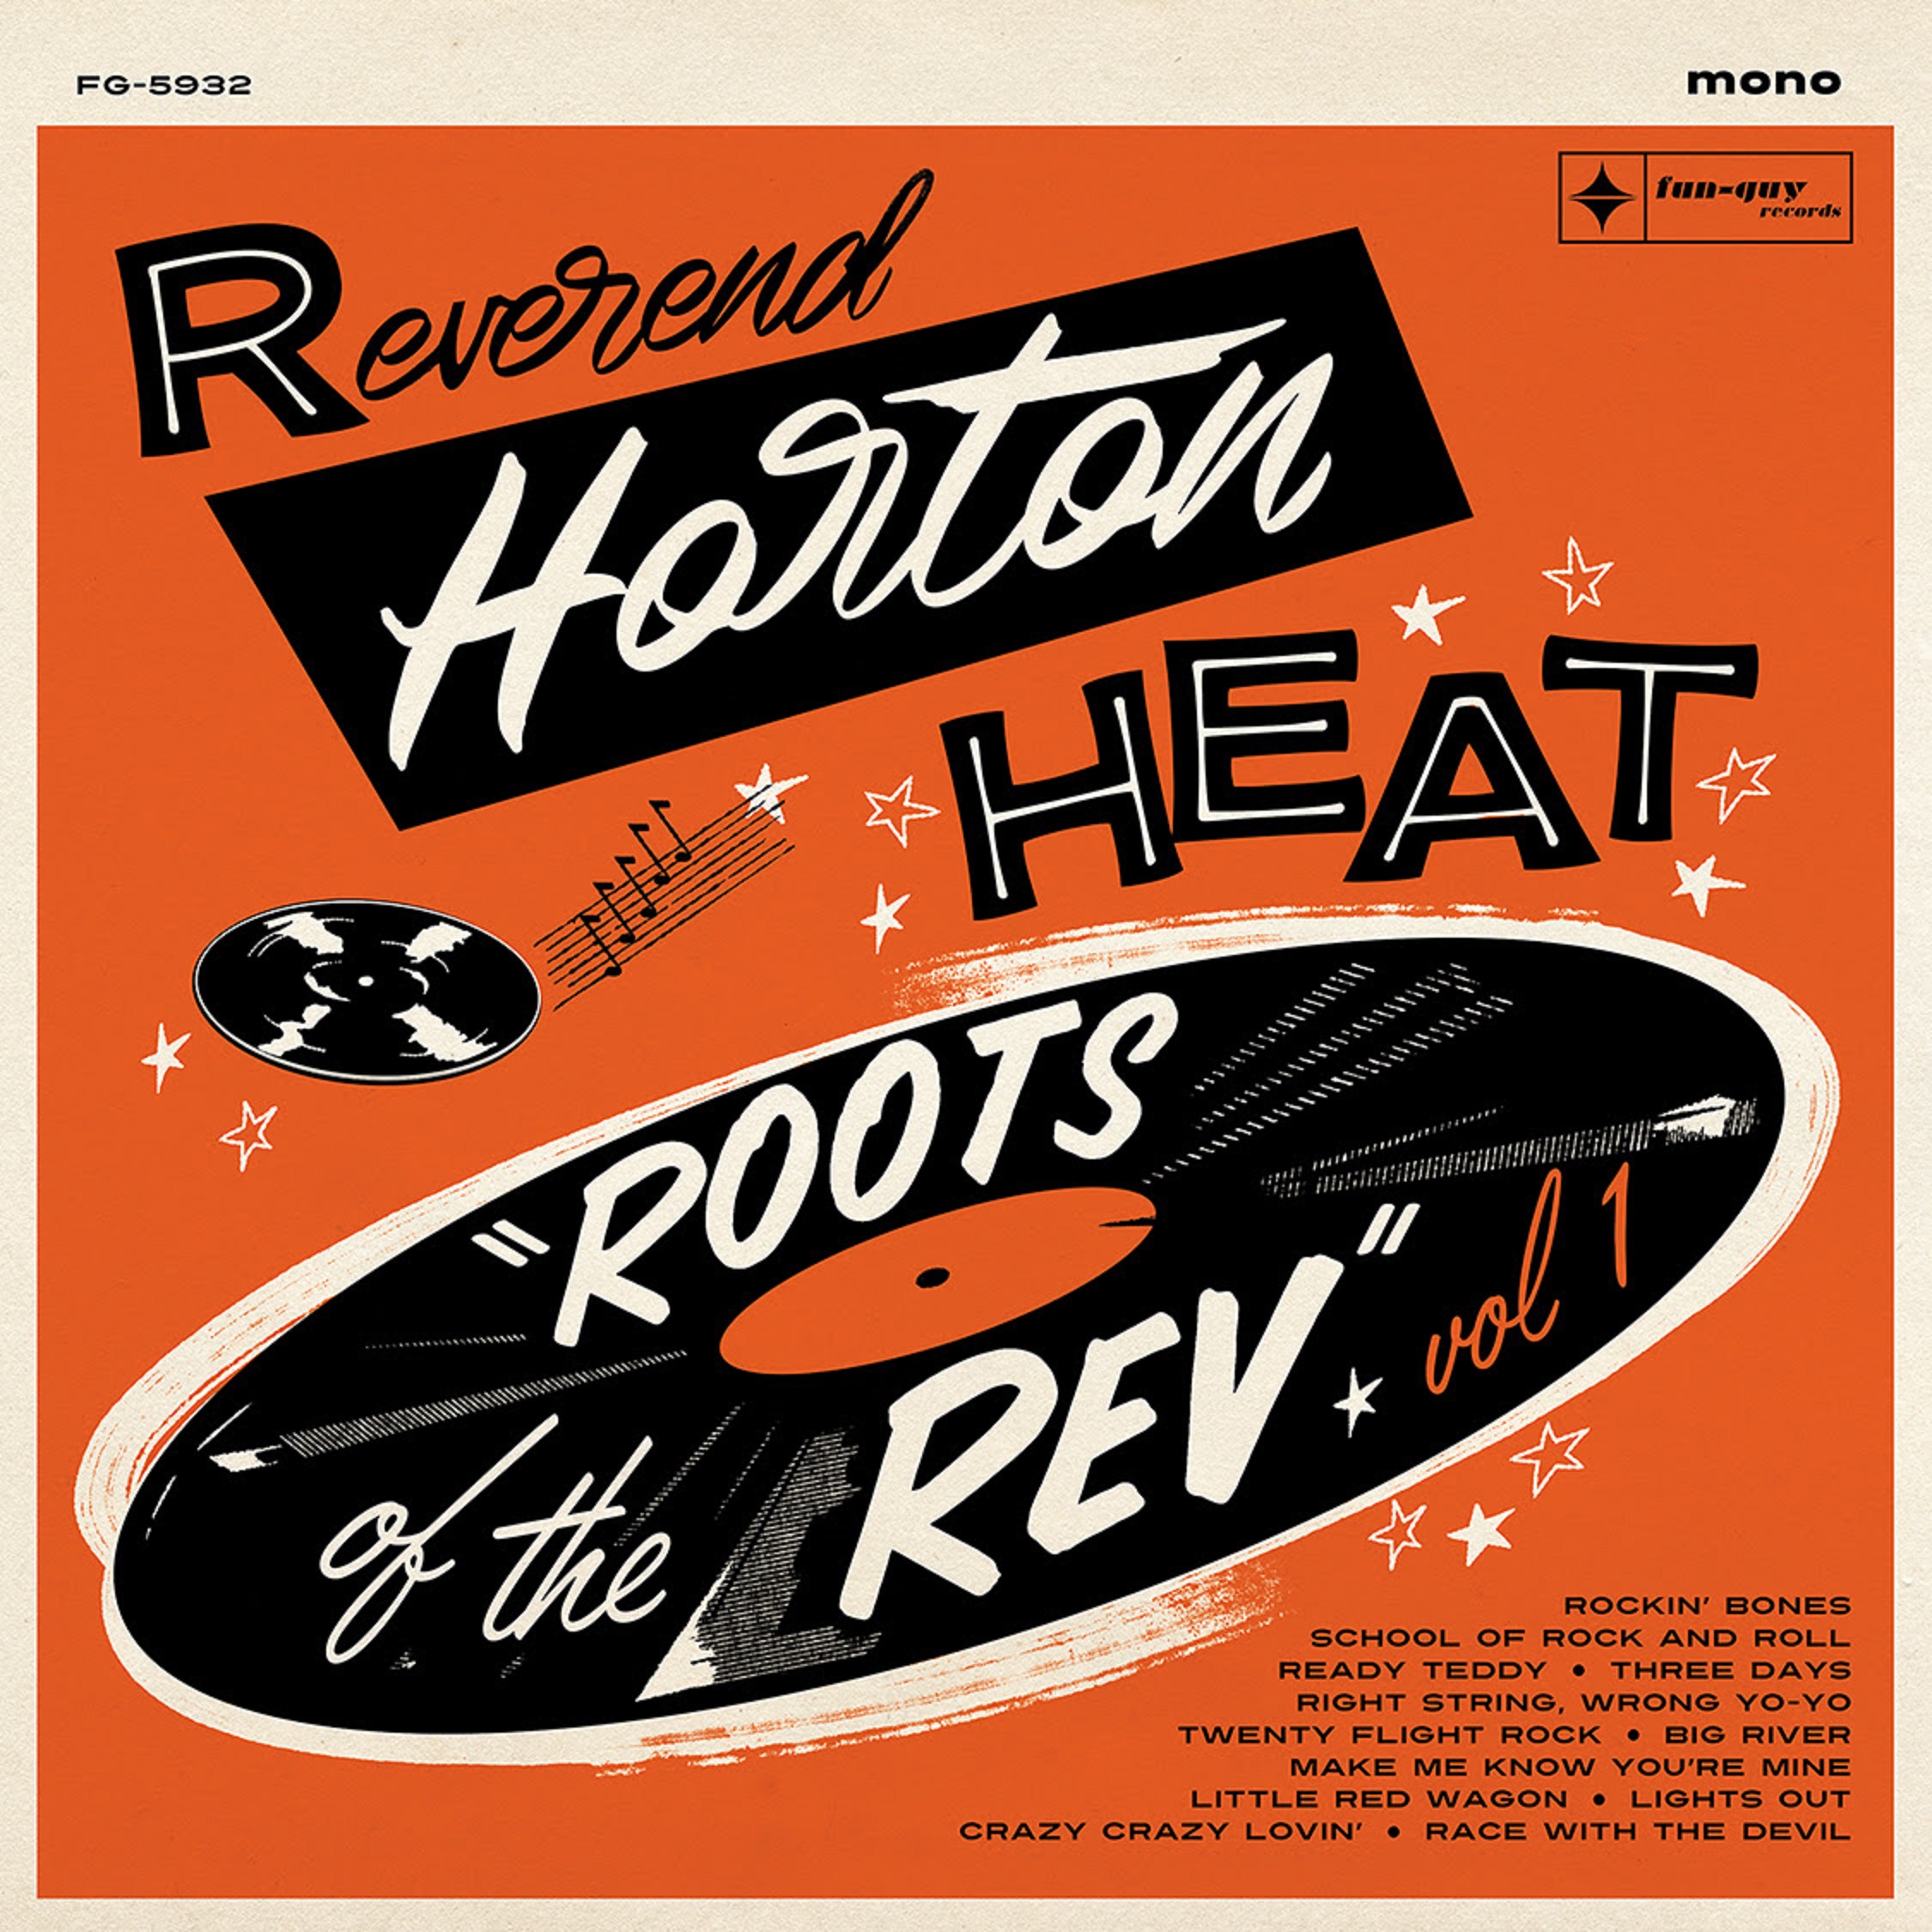 NEW Reverend Horton Heat album "Roots Of The Rev. Volume One"